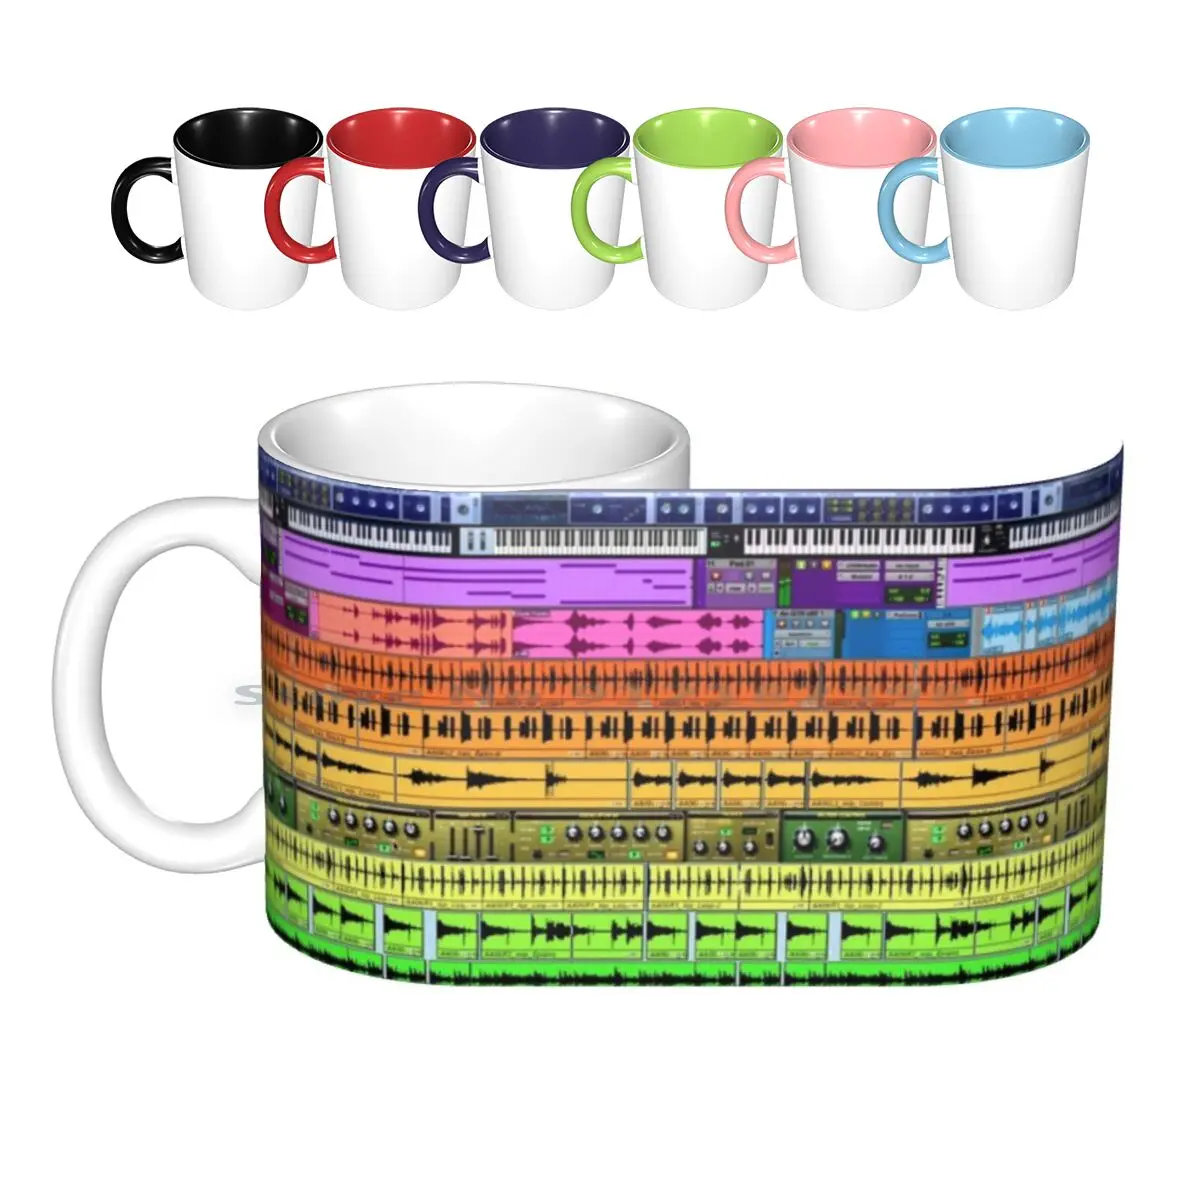 Producer's Choice Ceramic Mugs Coffee Cups Milk Tea Mug Daw Music Producer Sound Vst Protools Ableton Logic Pro Cubase Reason